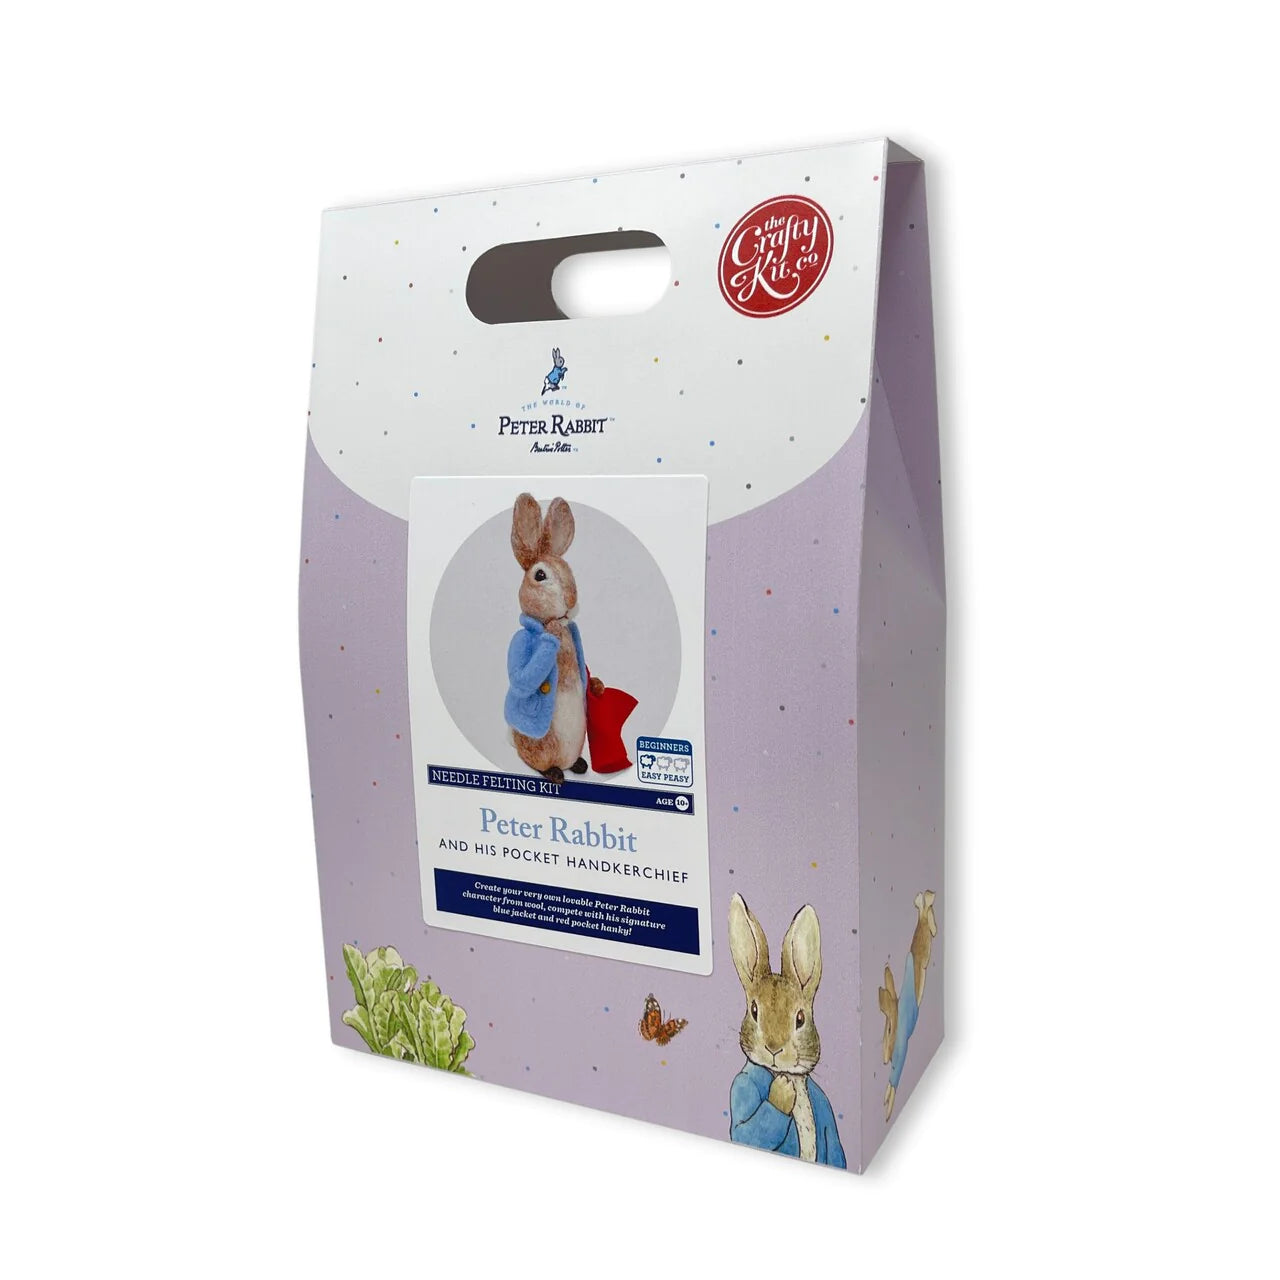 Crafty Kit Company Beatrix Potter Peter Rabbit and his Pocket Handkerchief Needle Felting Craft Kit